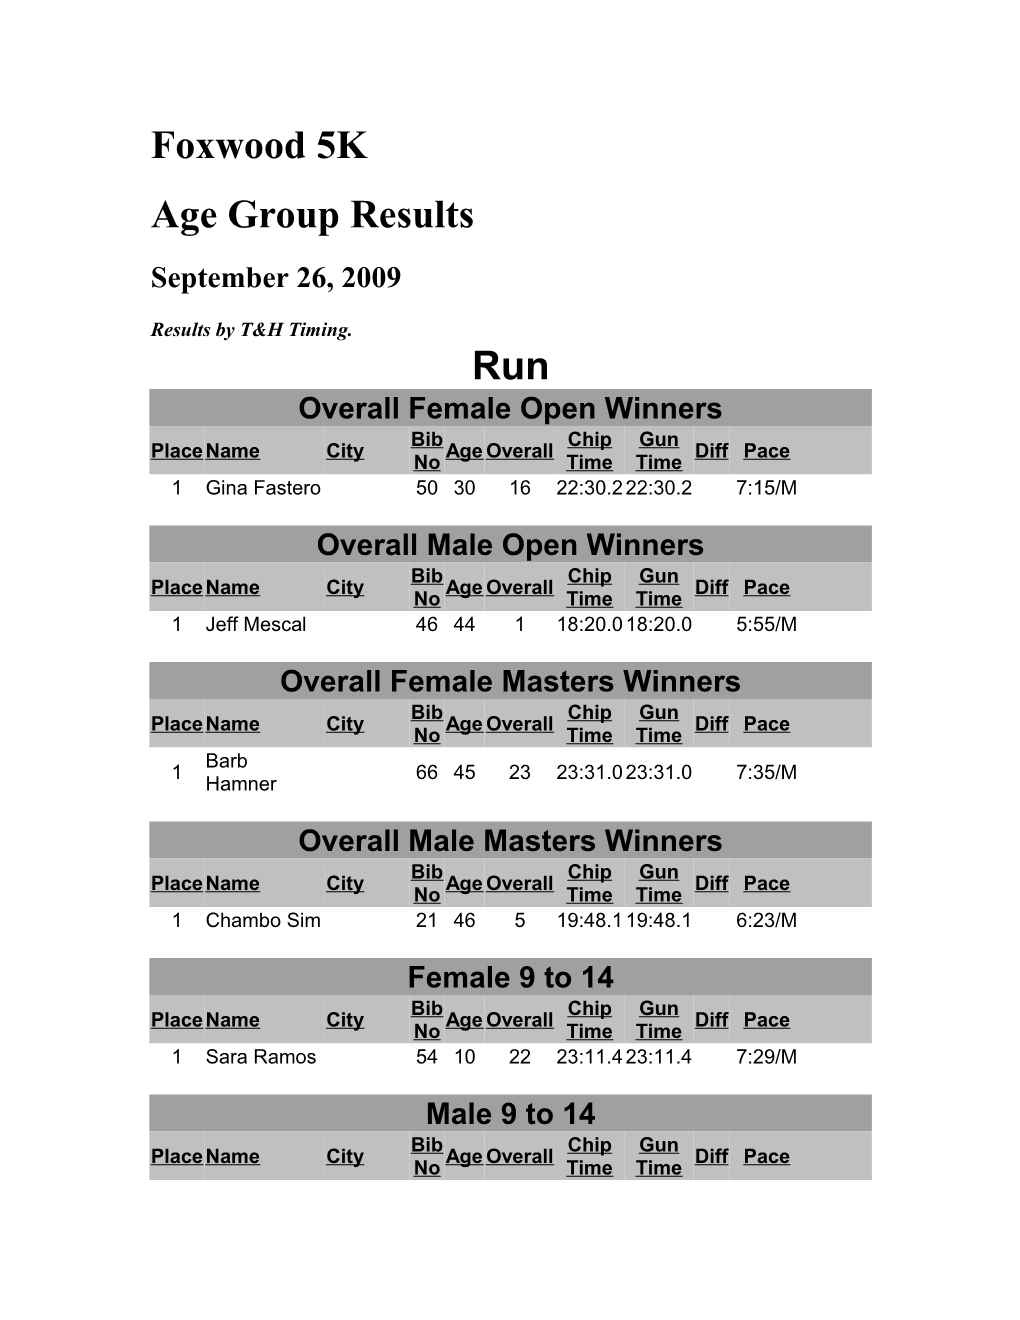 Overall Female Open Winners